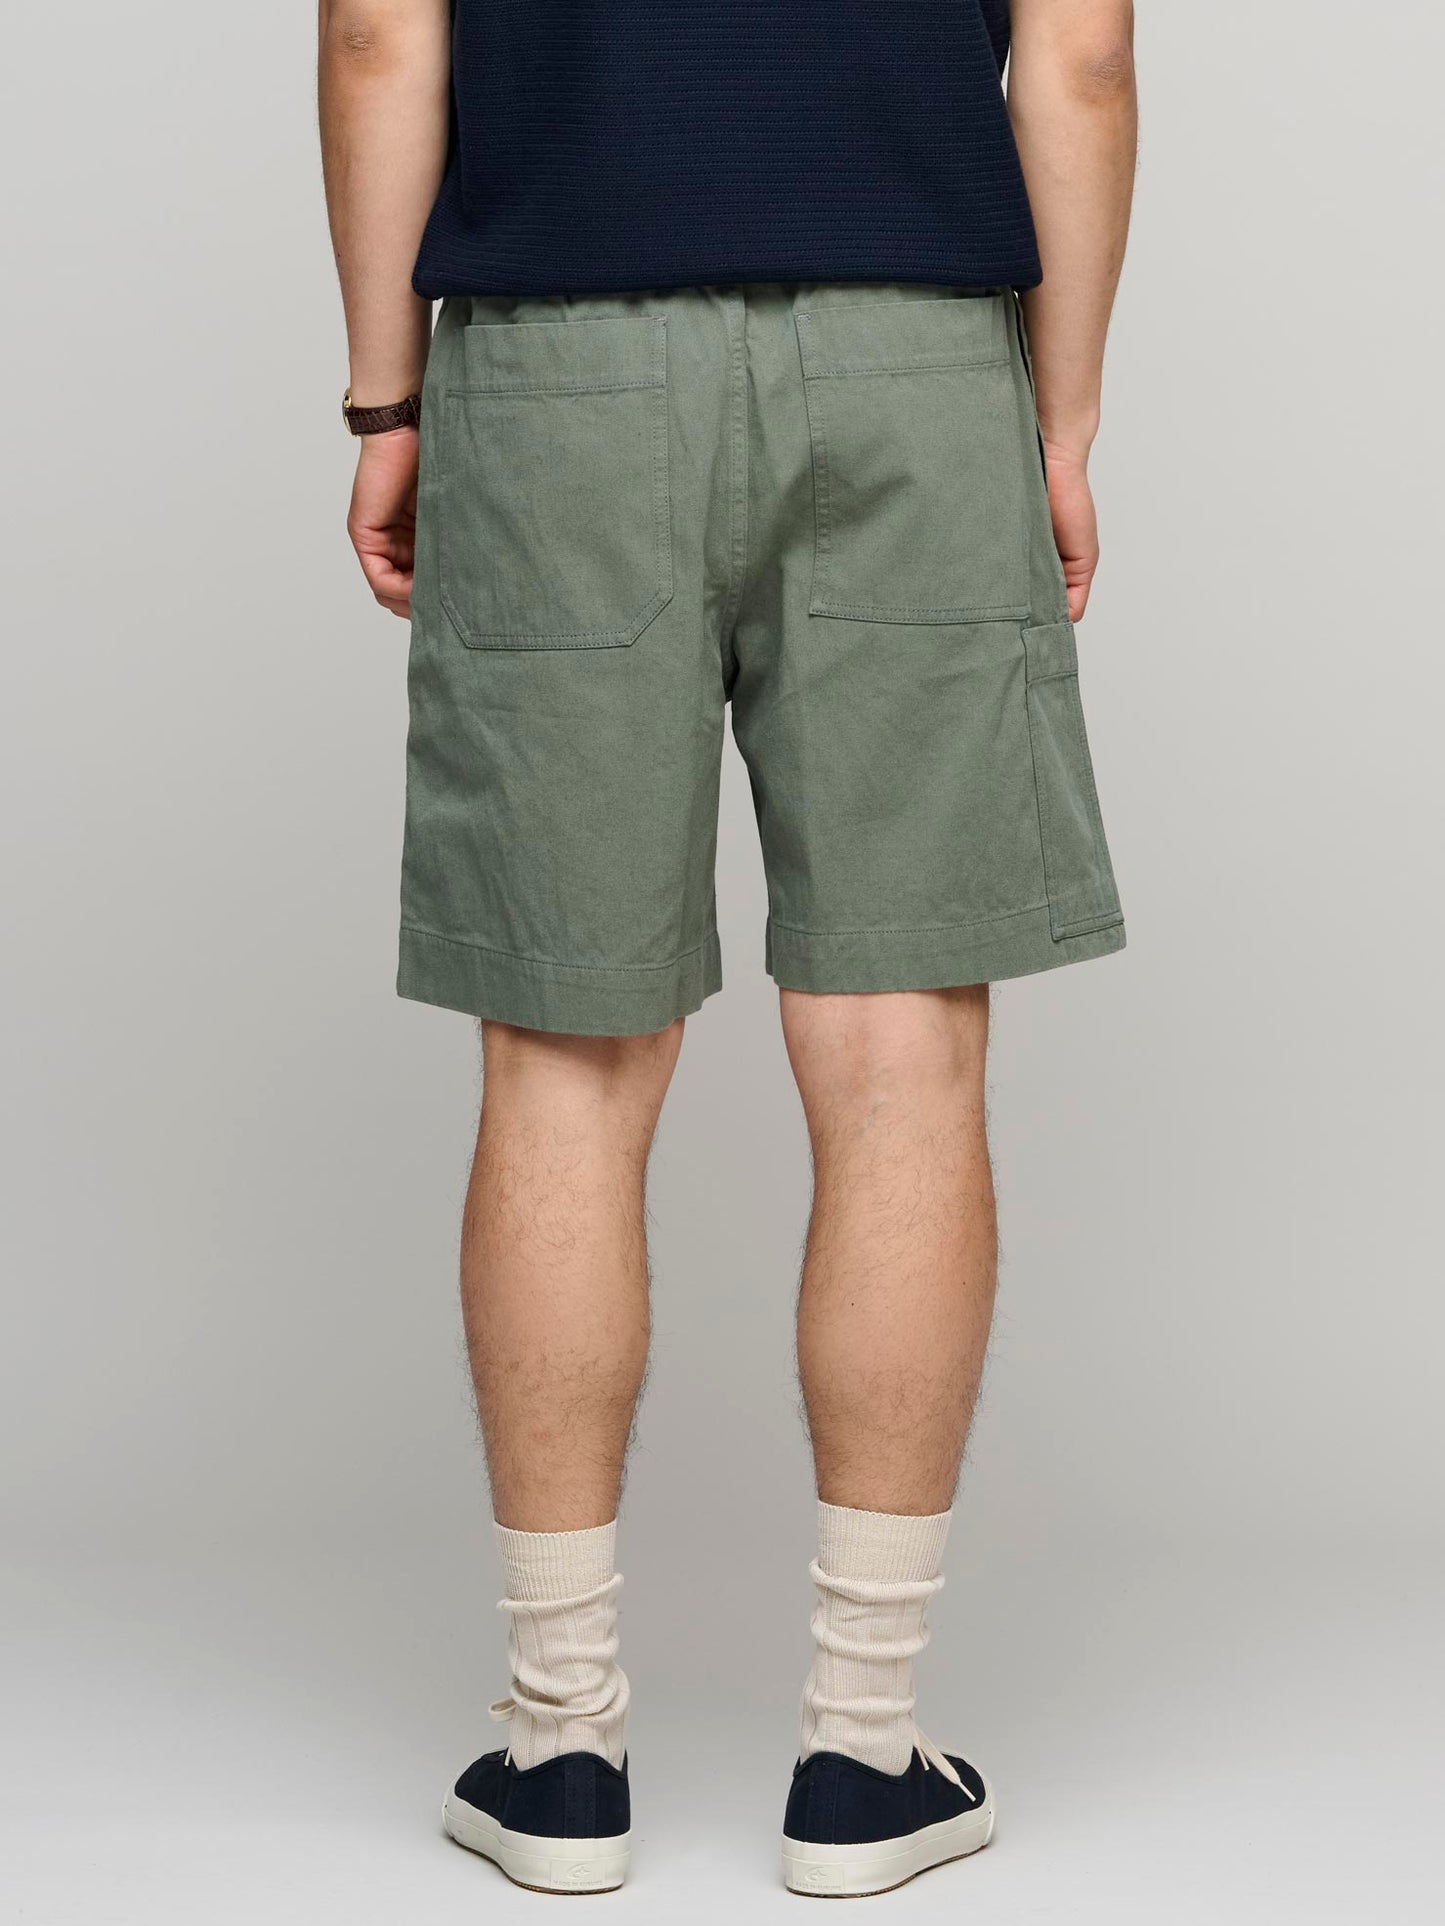 Pull Up Shorts Cotton Hemp Twill, Uniform Green